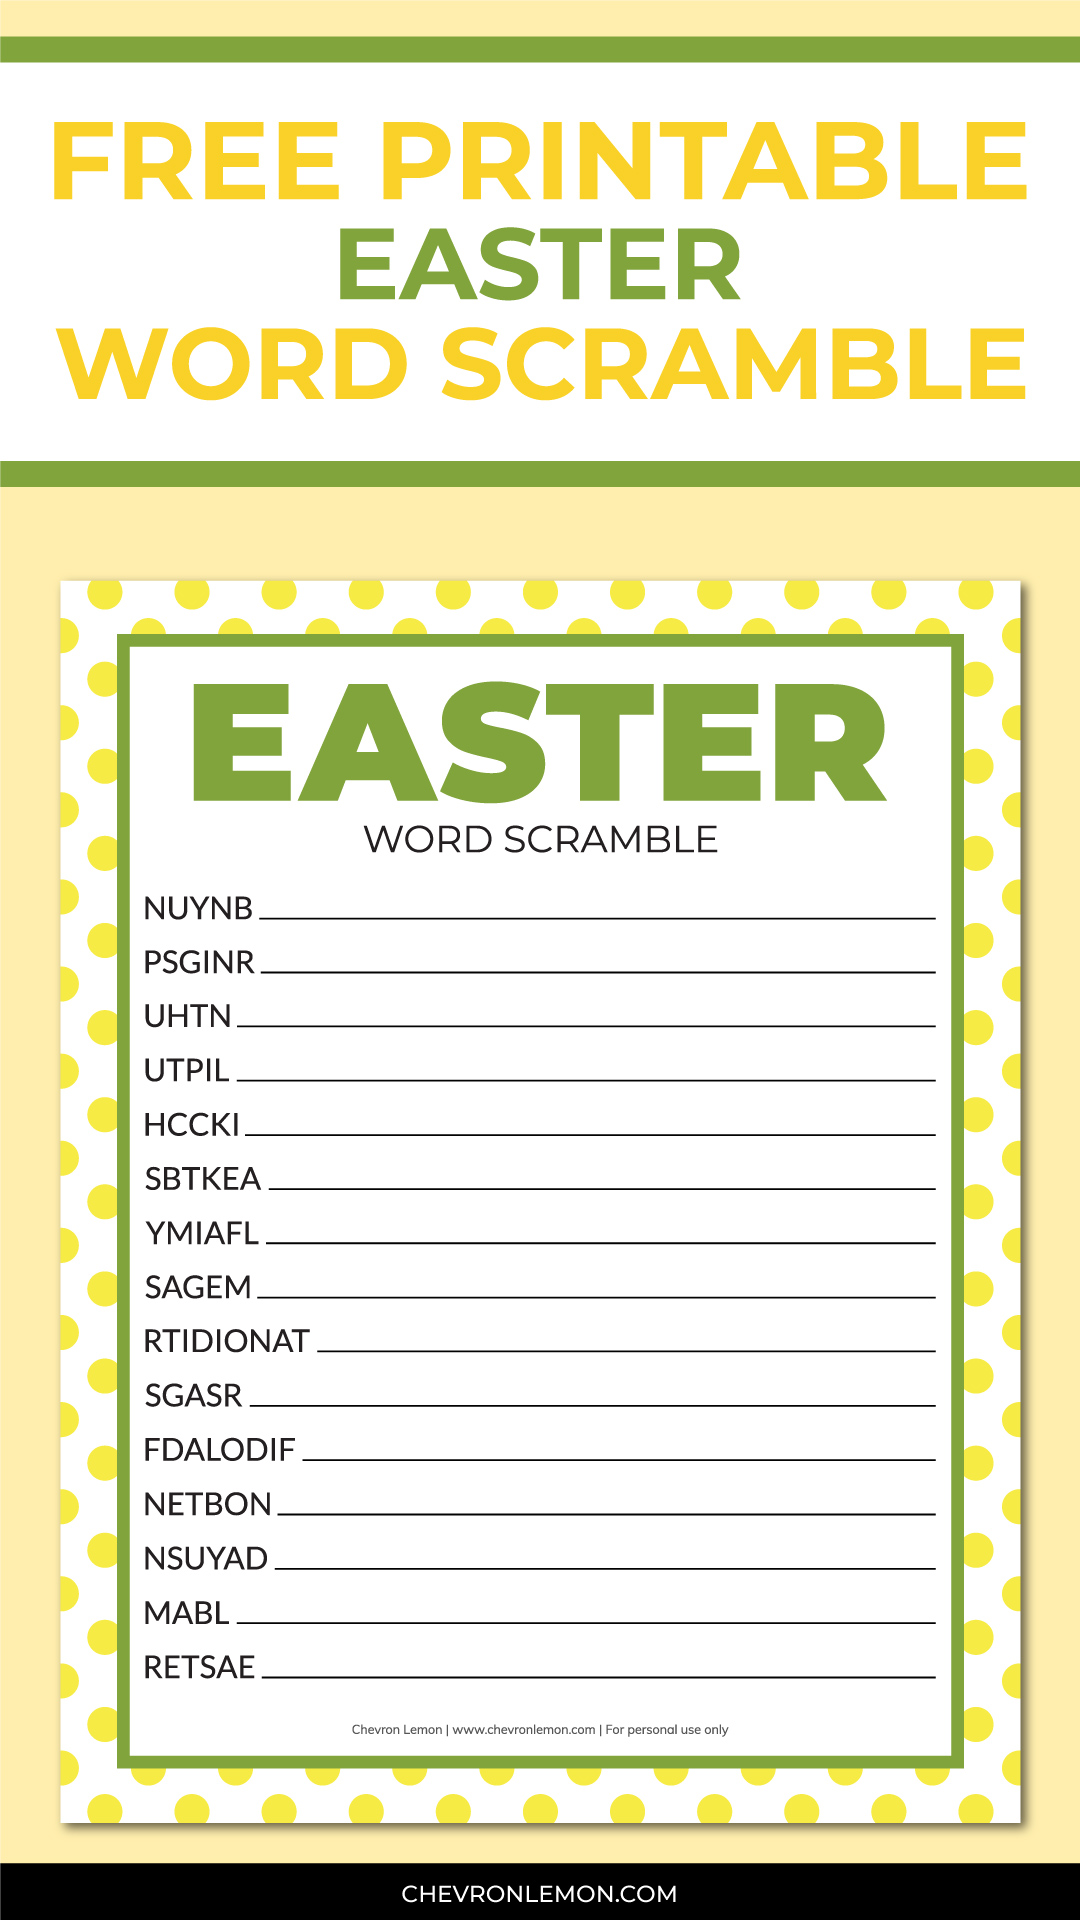 Easter word scramble